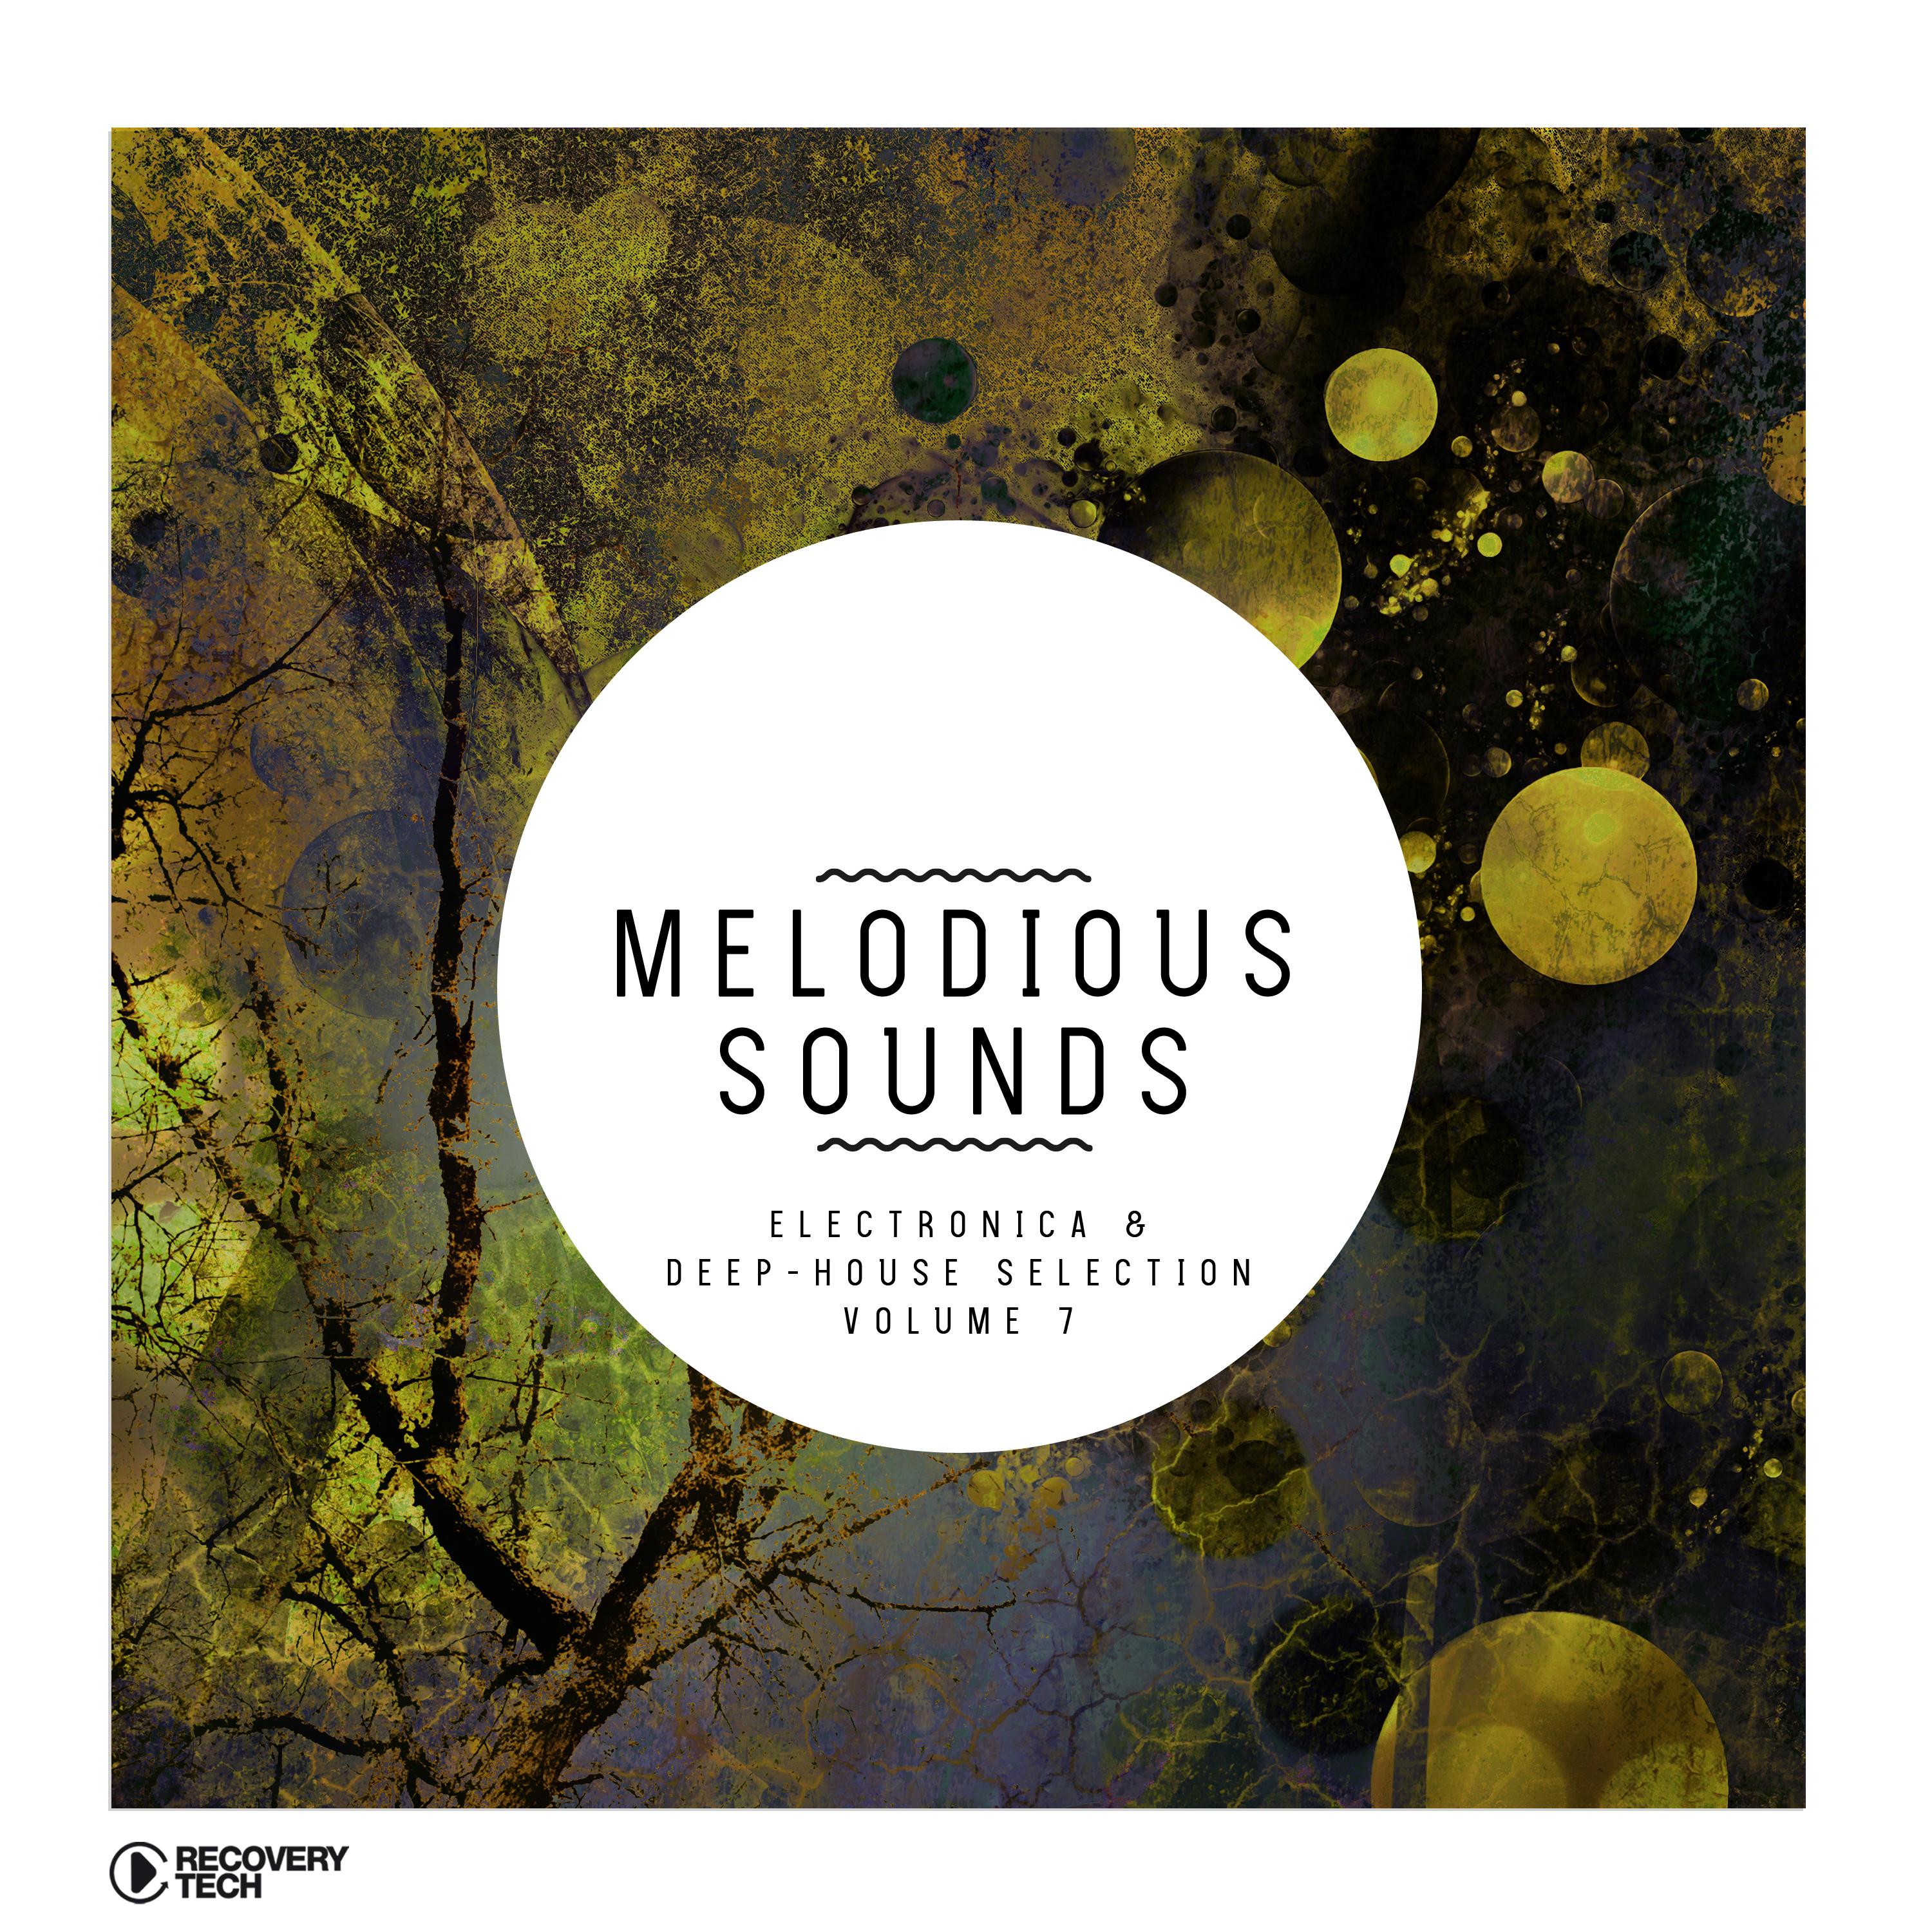 Melodious Sounds, Vol. 7